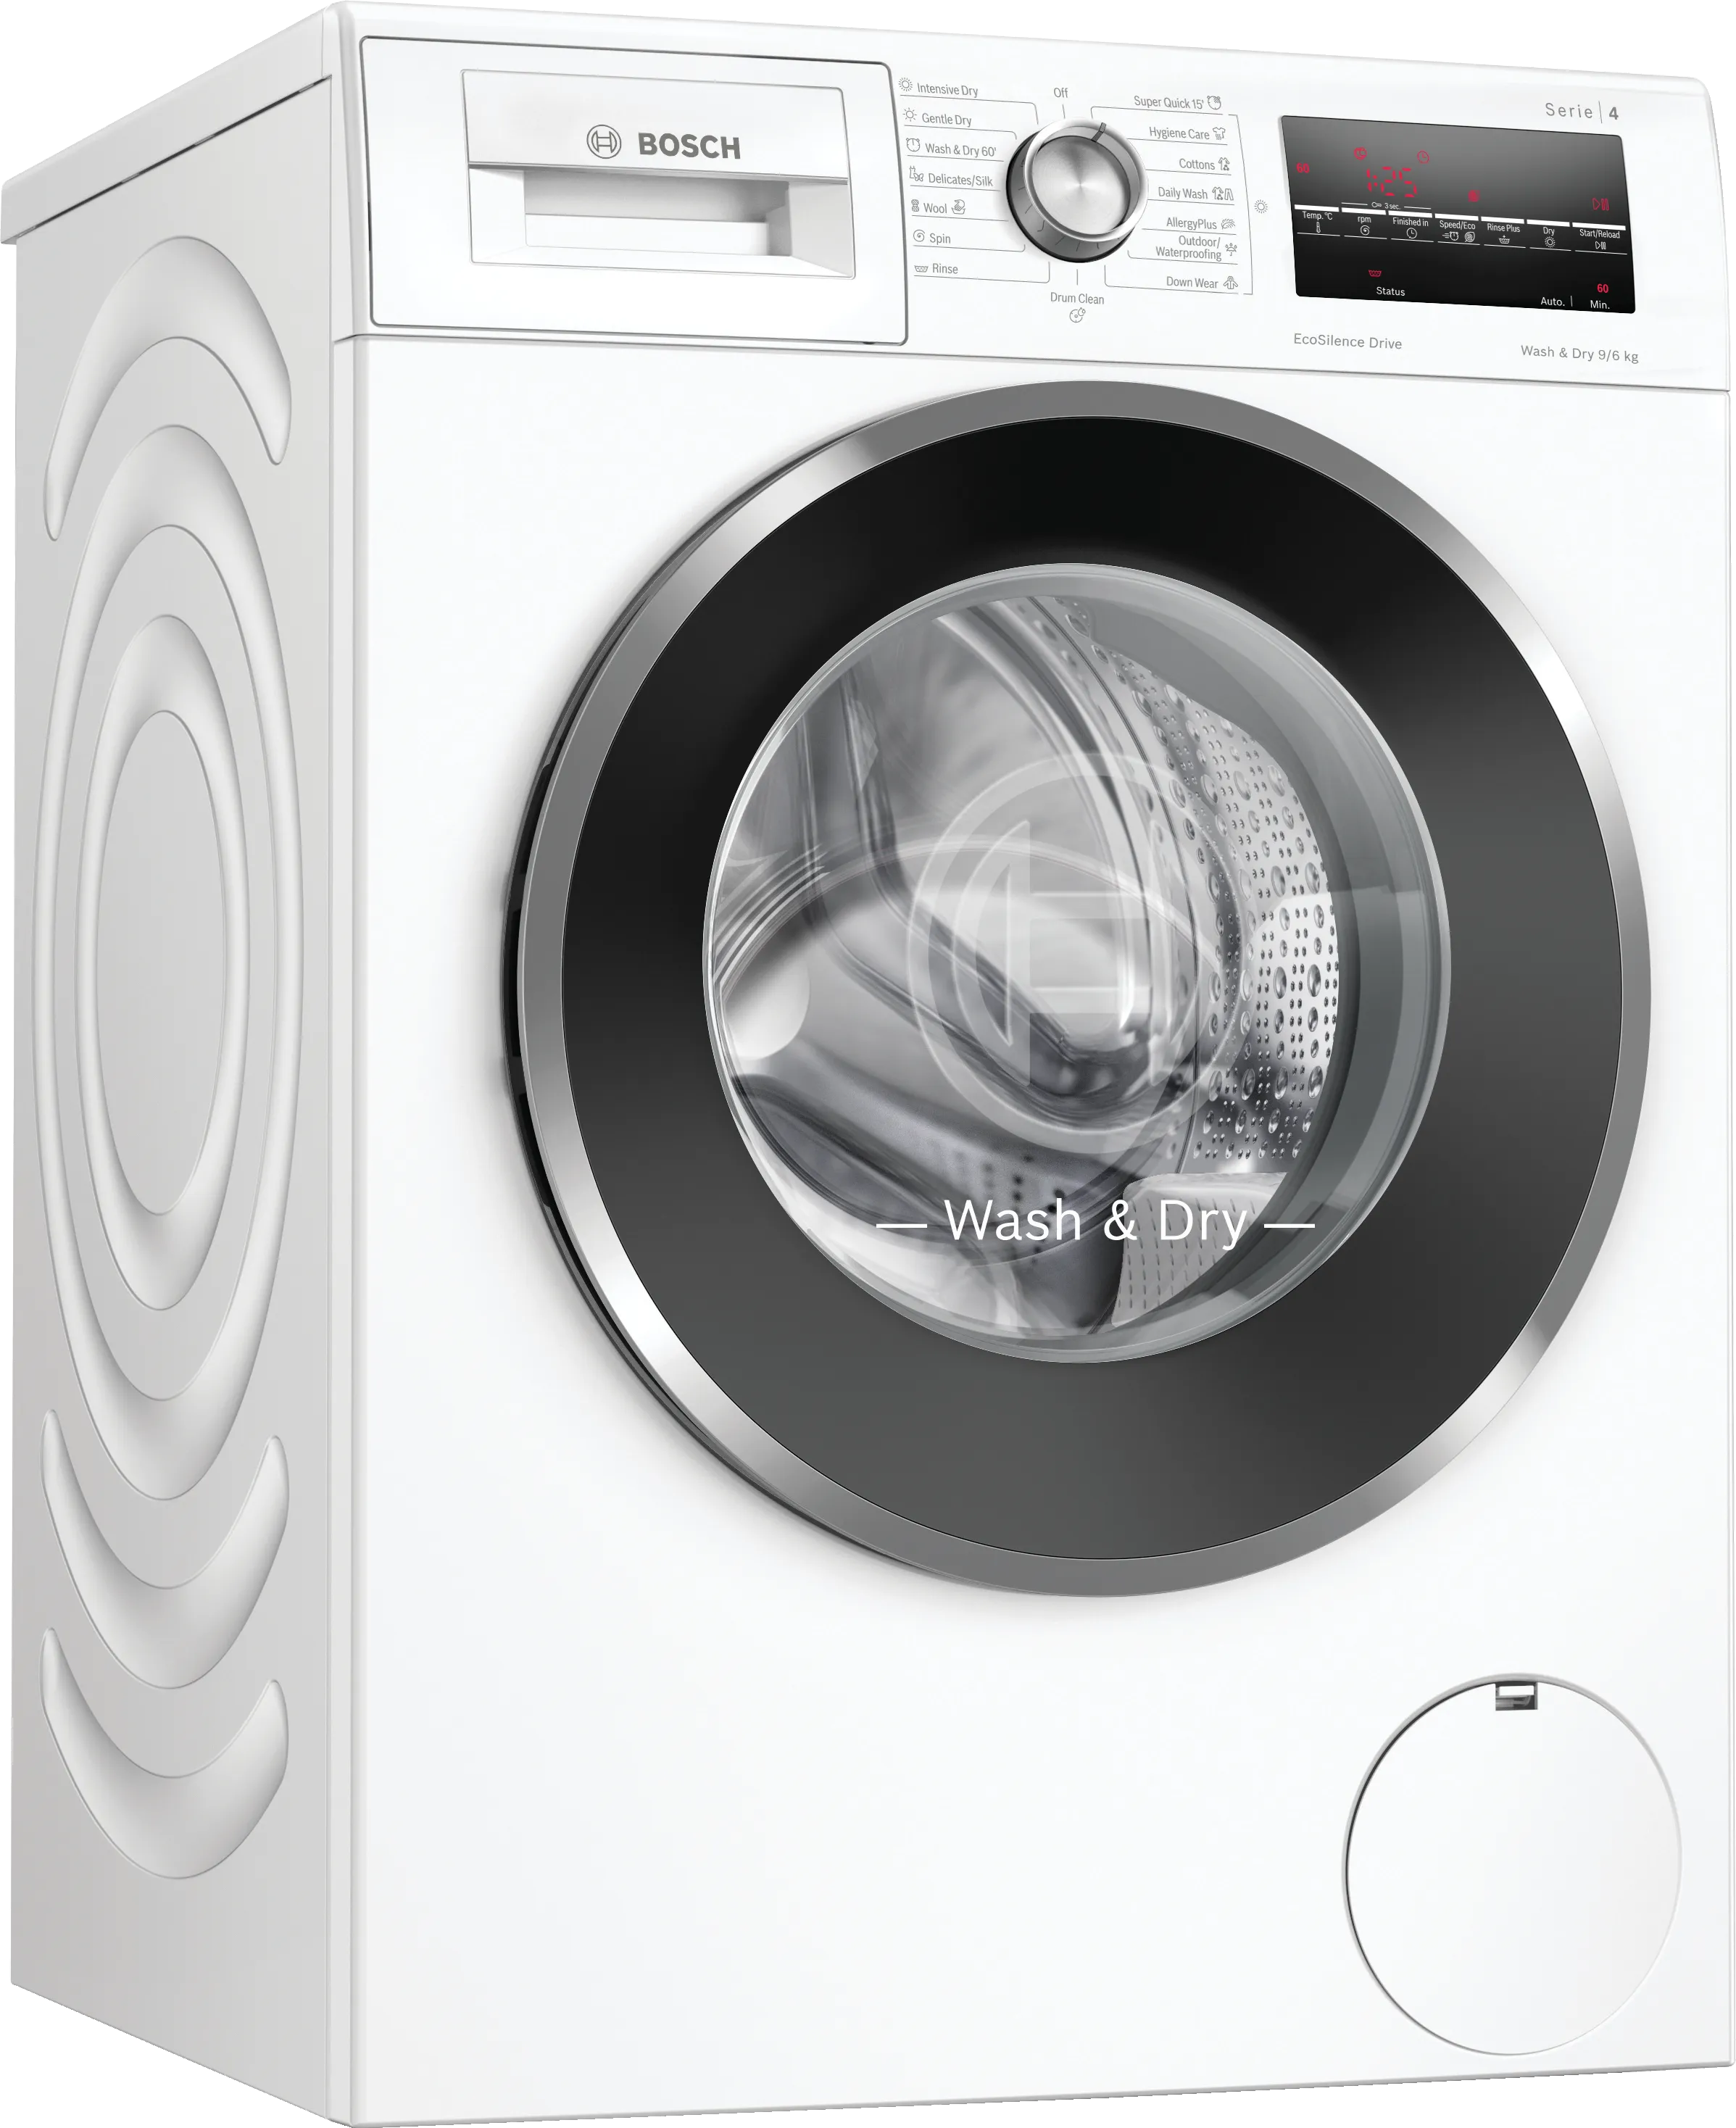 Series 4 Máy giặt - Máy sấy 9/6 kg 1400 vòng/phút 